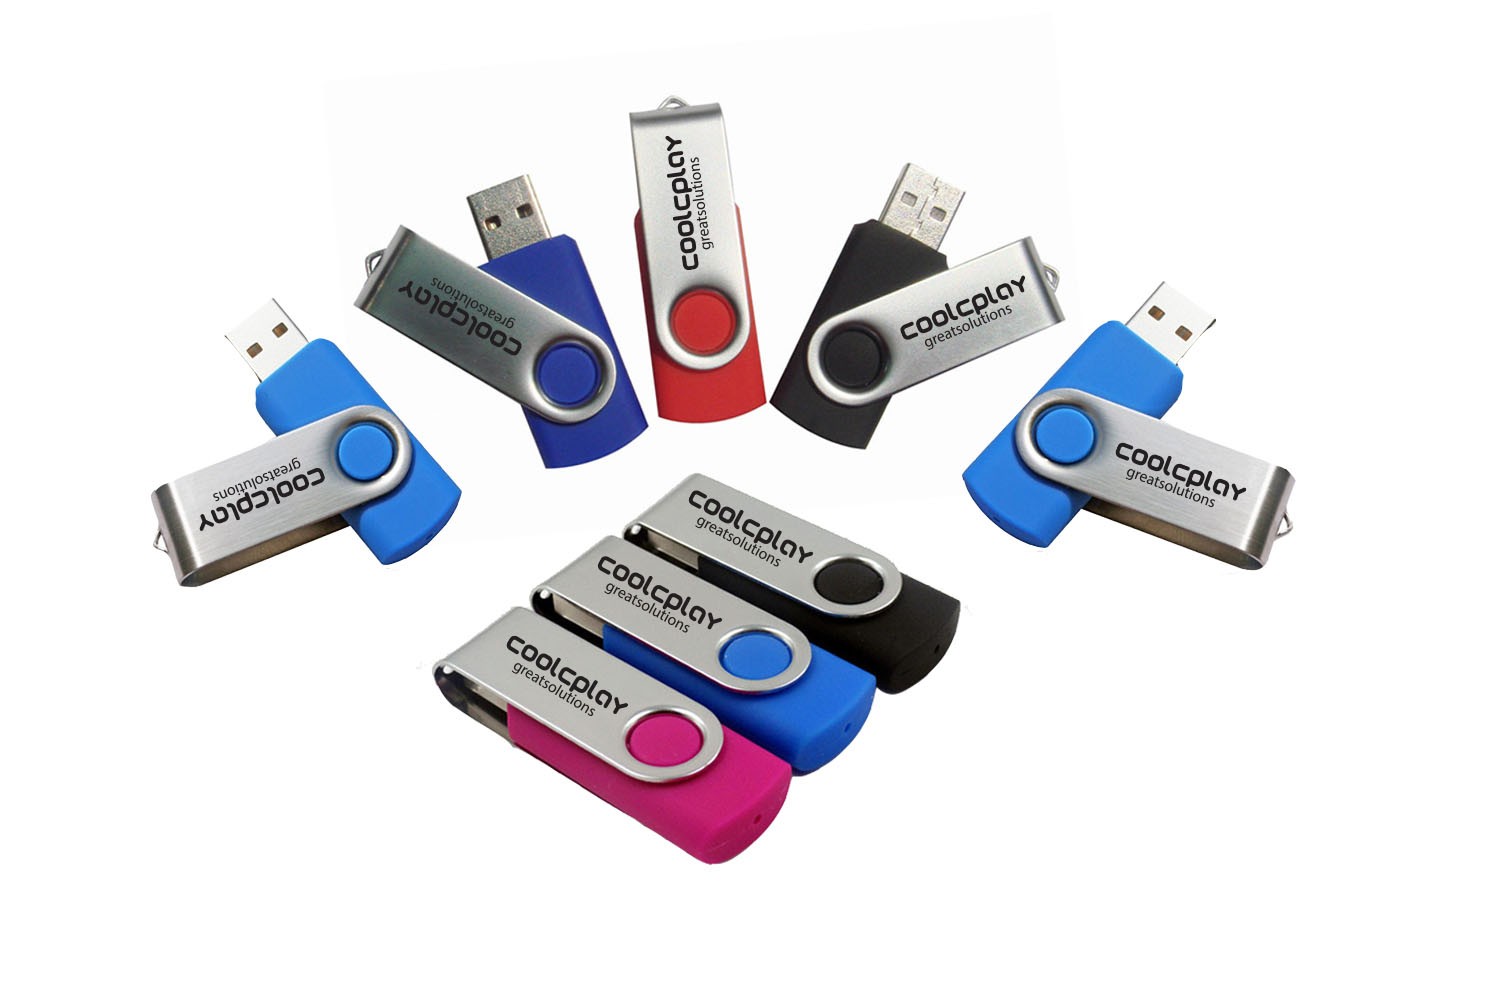 Colorful 16 GB USB Flashdrive With Swivel Cap